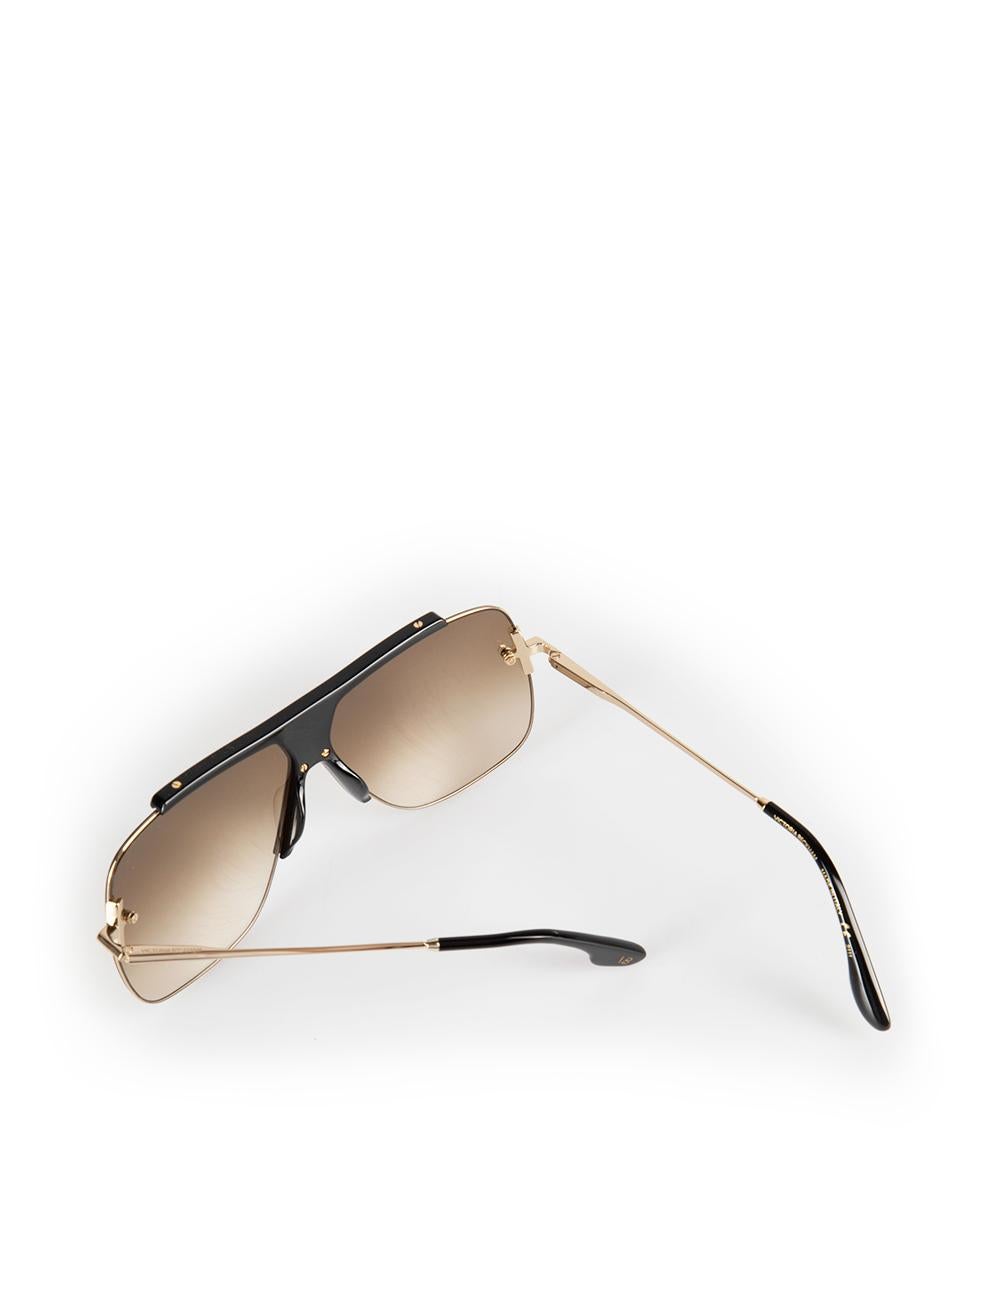 Victoria Beckham Brown Gradient Navigator Sunglasses For Sale 4